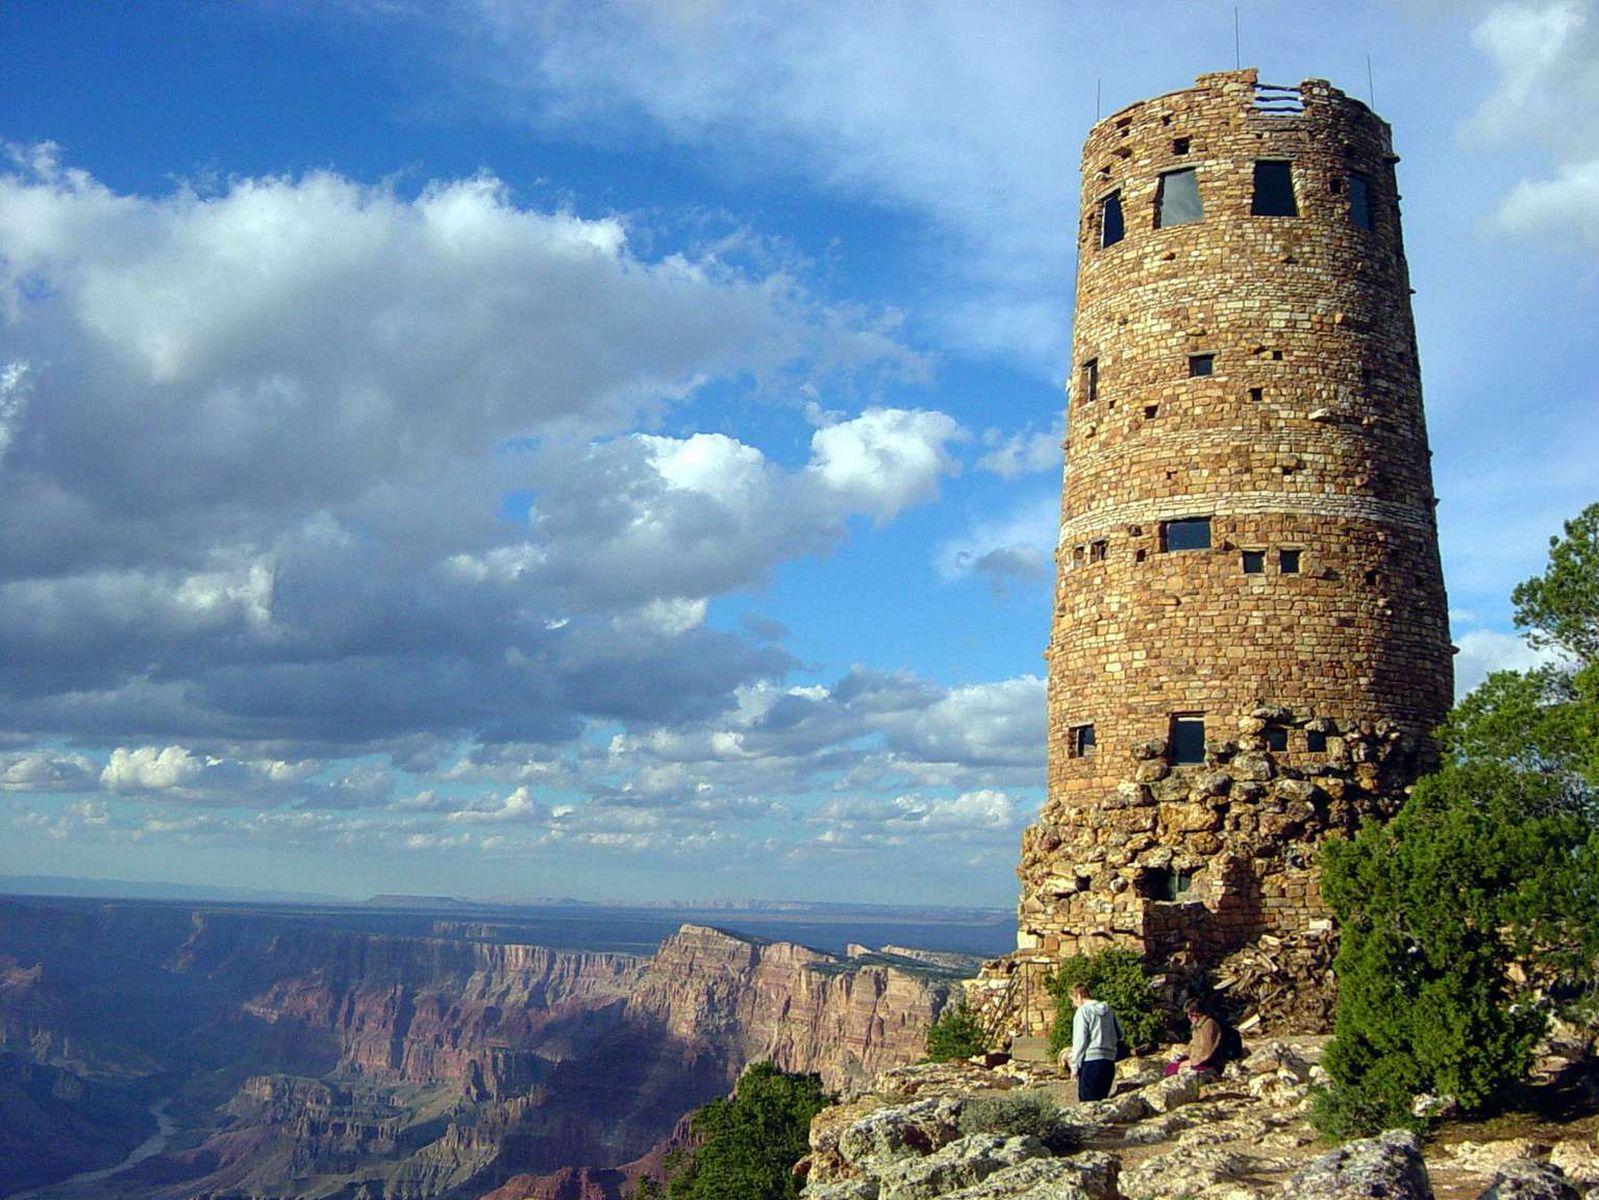 Desert View - Grand Canyon National Park (U.S. National Park Service)